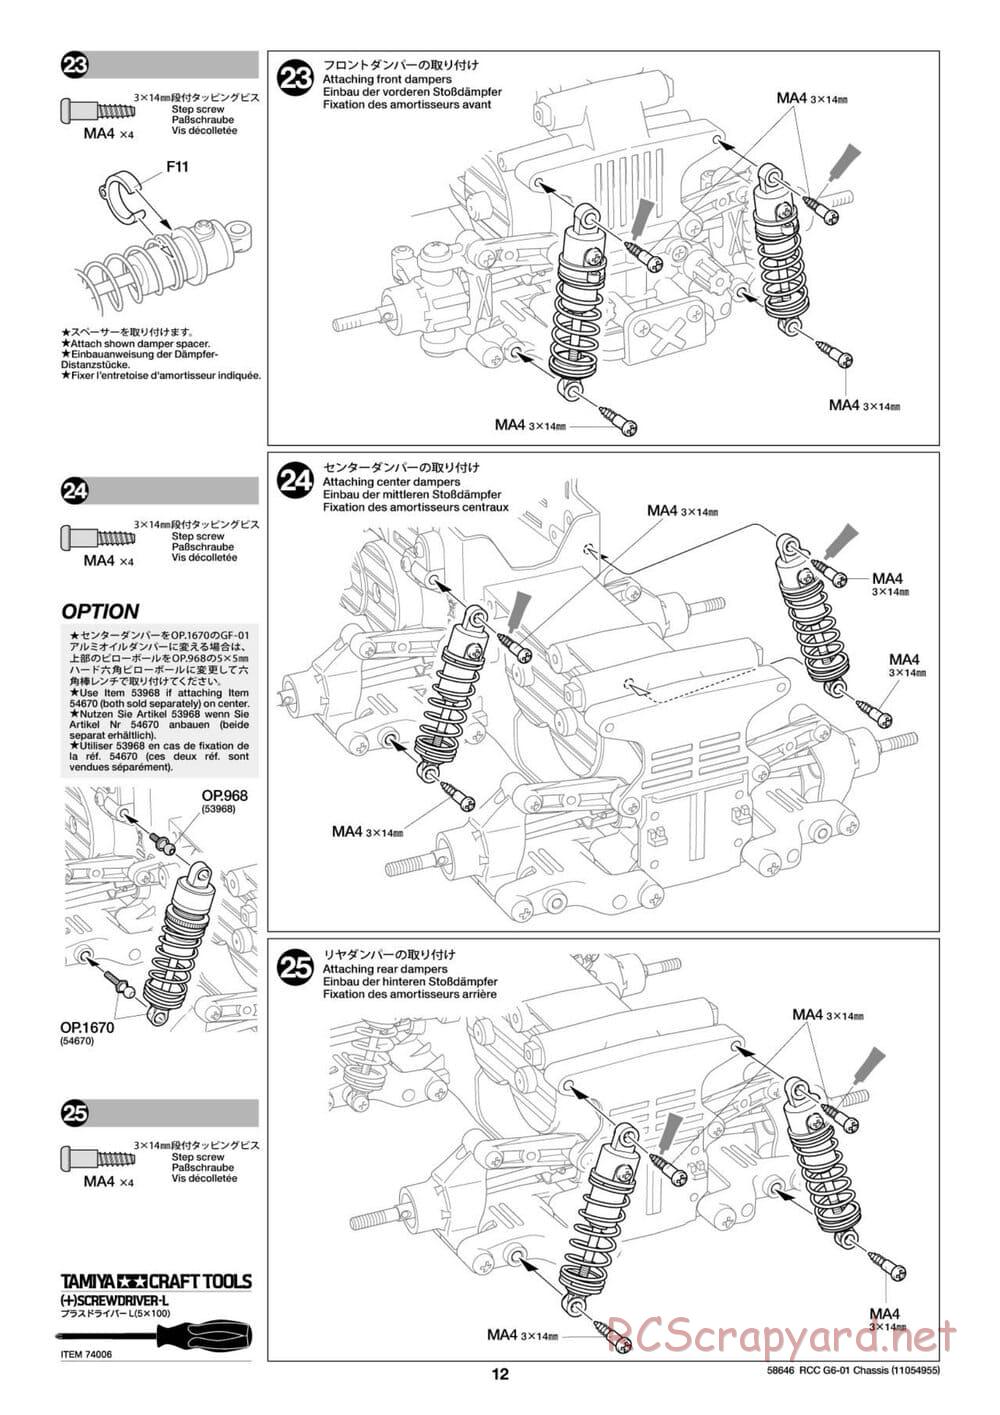 Tamiya - Konghead 6x6 - G6-01 Chassis - Manual - Page 12